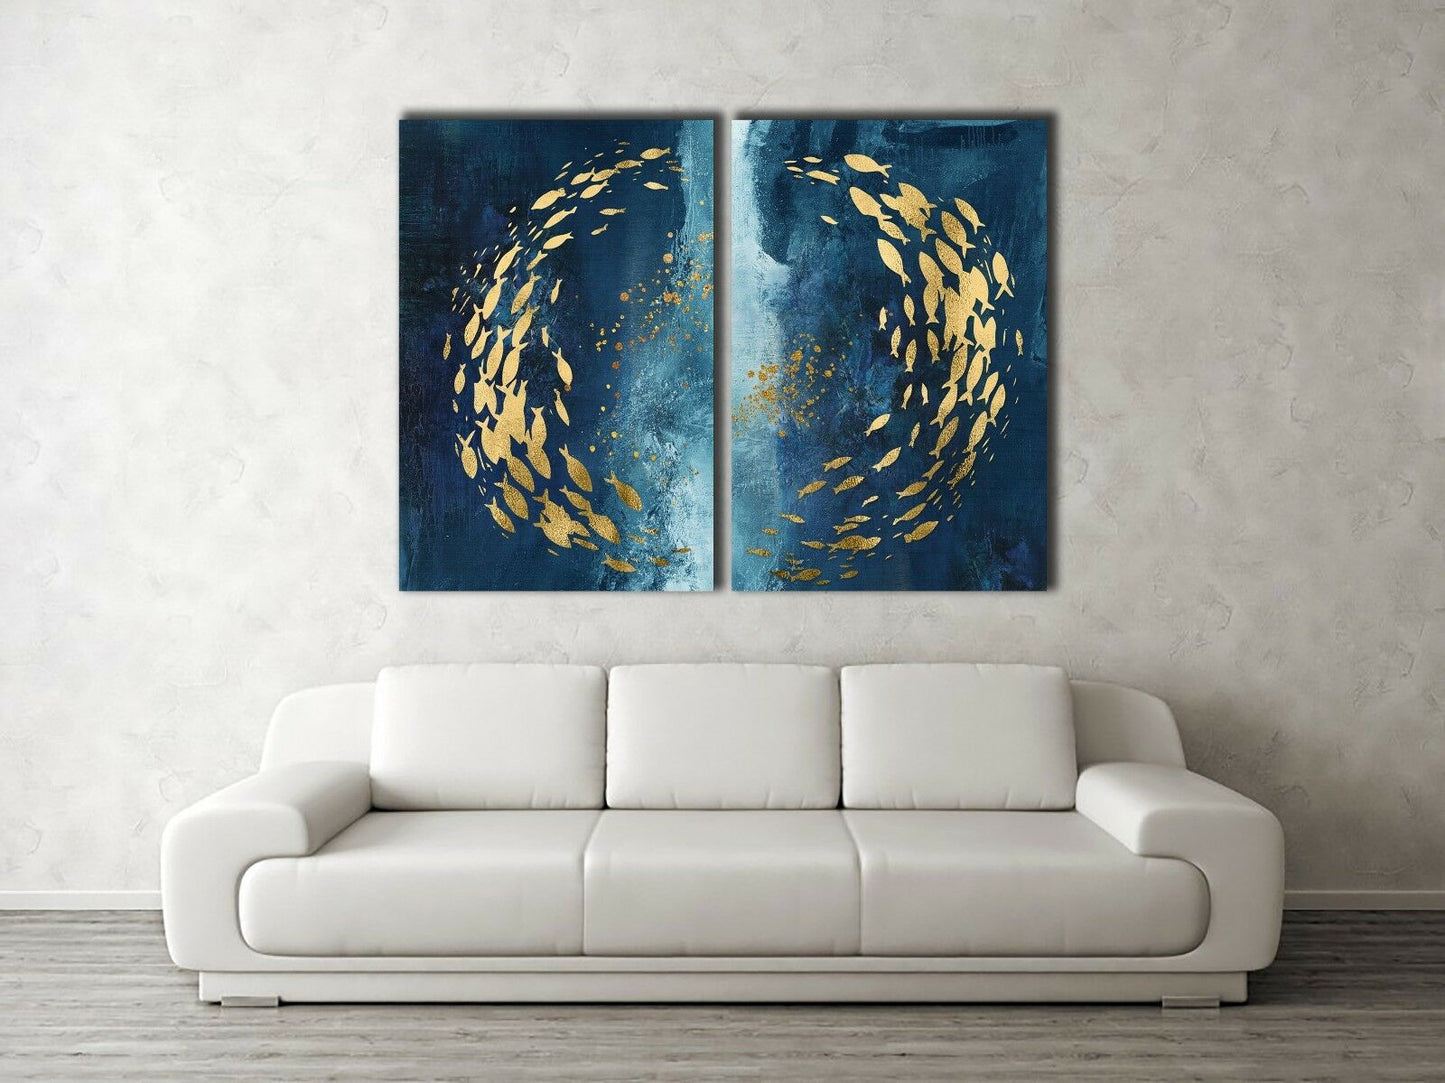 Gold Fish on Blue Ocean Framed Canvas print Abstract Dinning Room Wall Art